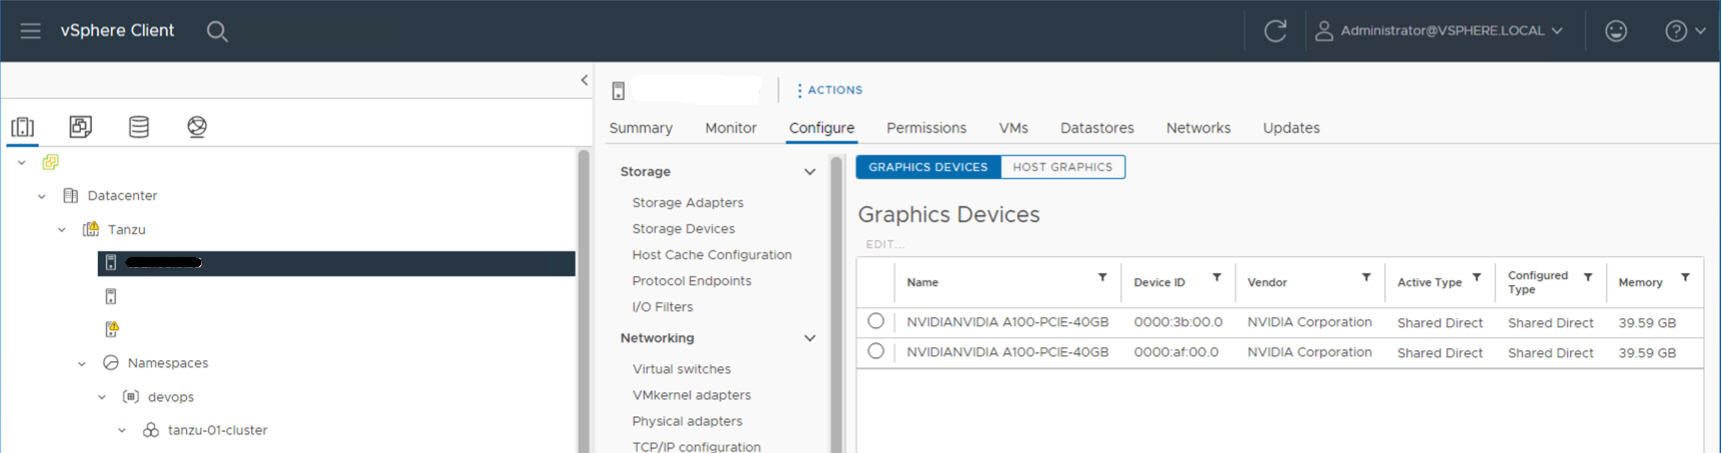 vSphere Client 中的 [圖形裝置] 索引標籤列出了 NVIDIA GPU A100 裝置。